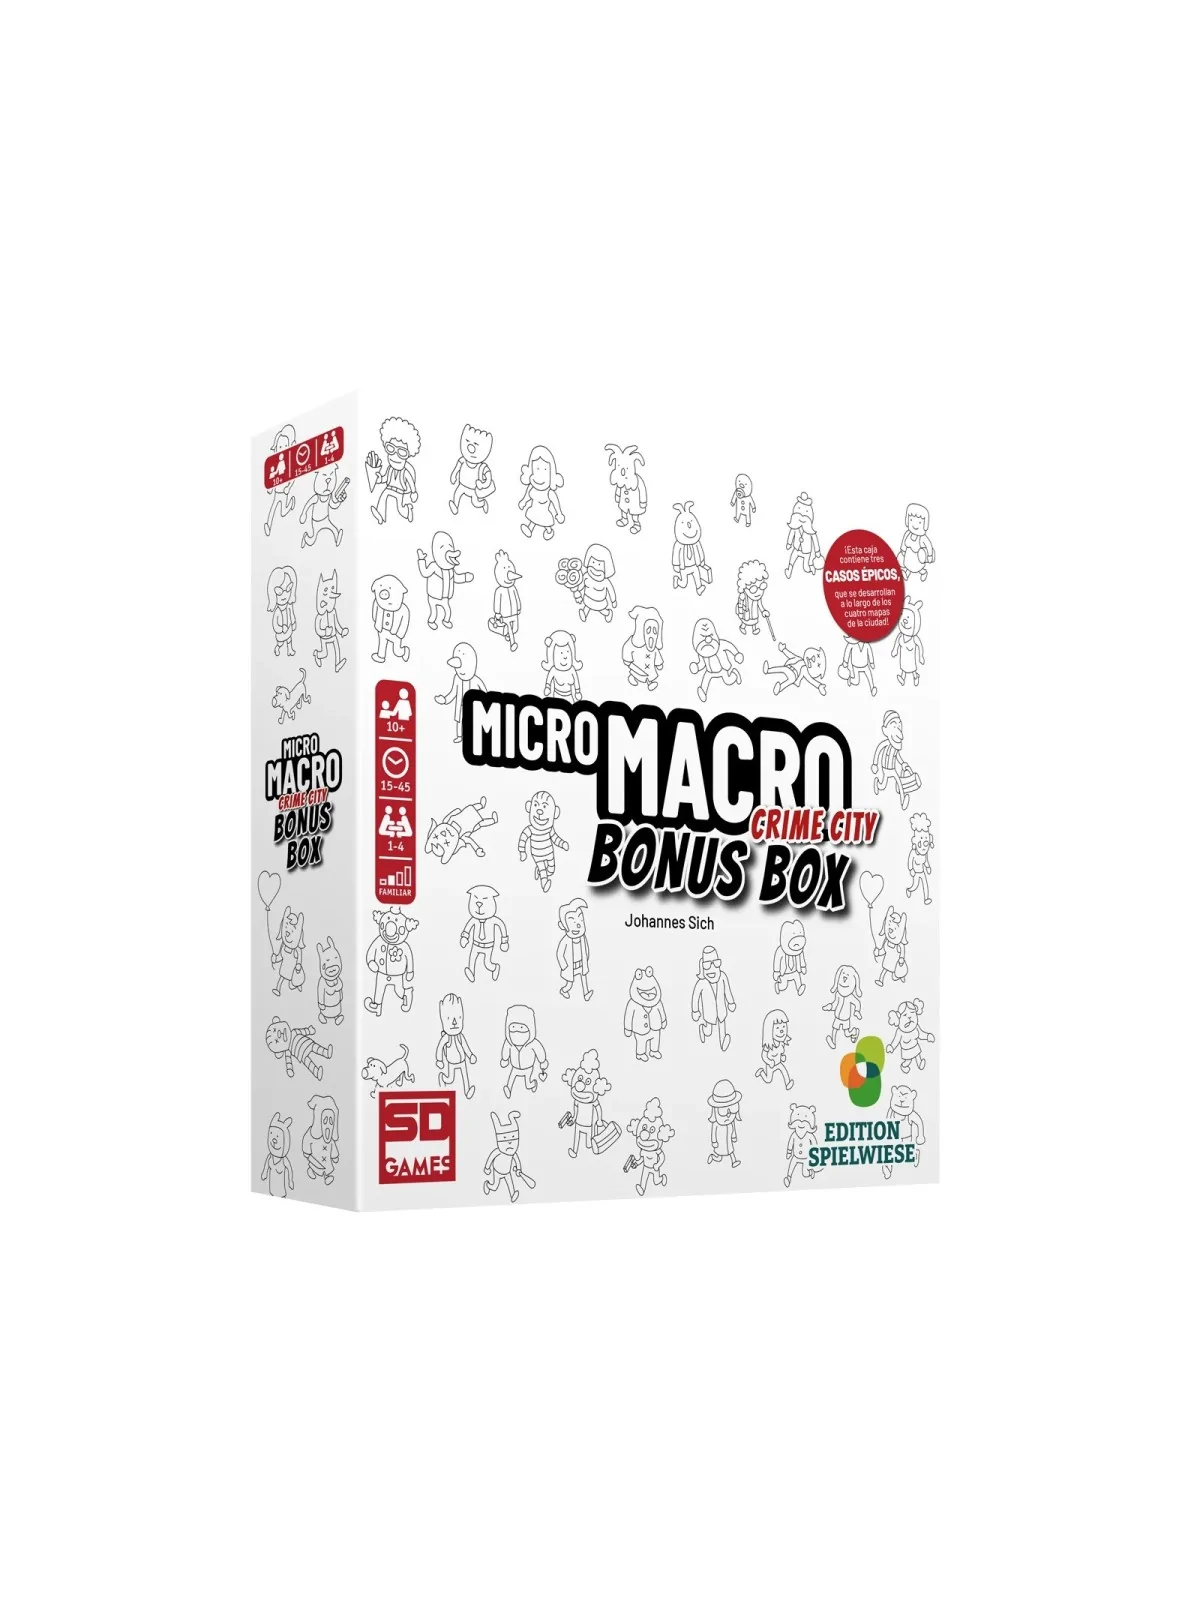 Comprar MicroMacro Crime City: Bonus Box barato al mejor precio 29,95 